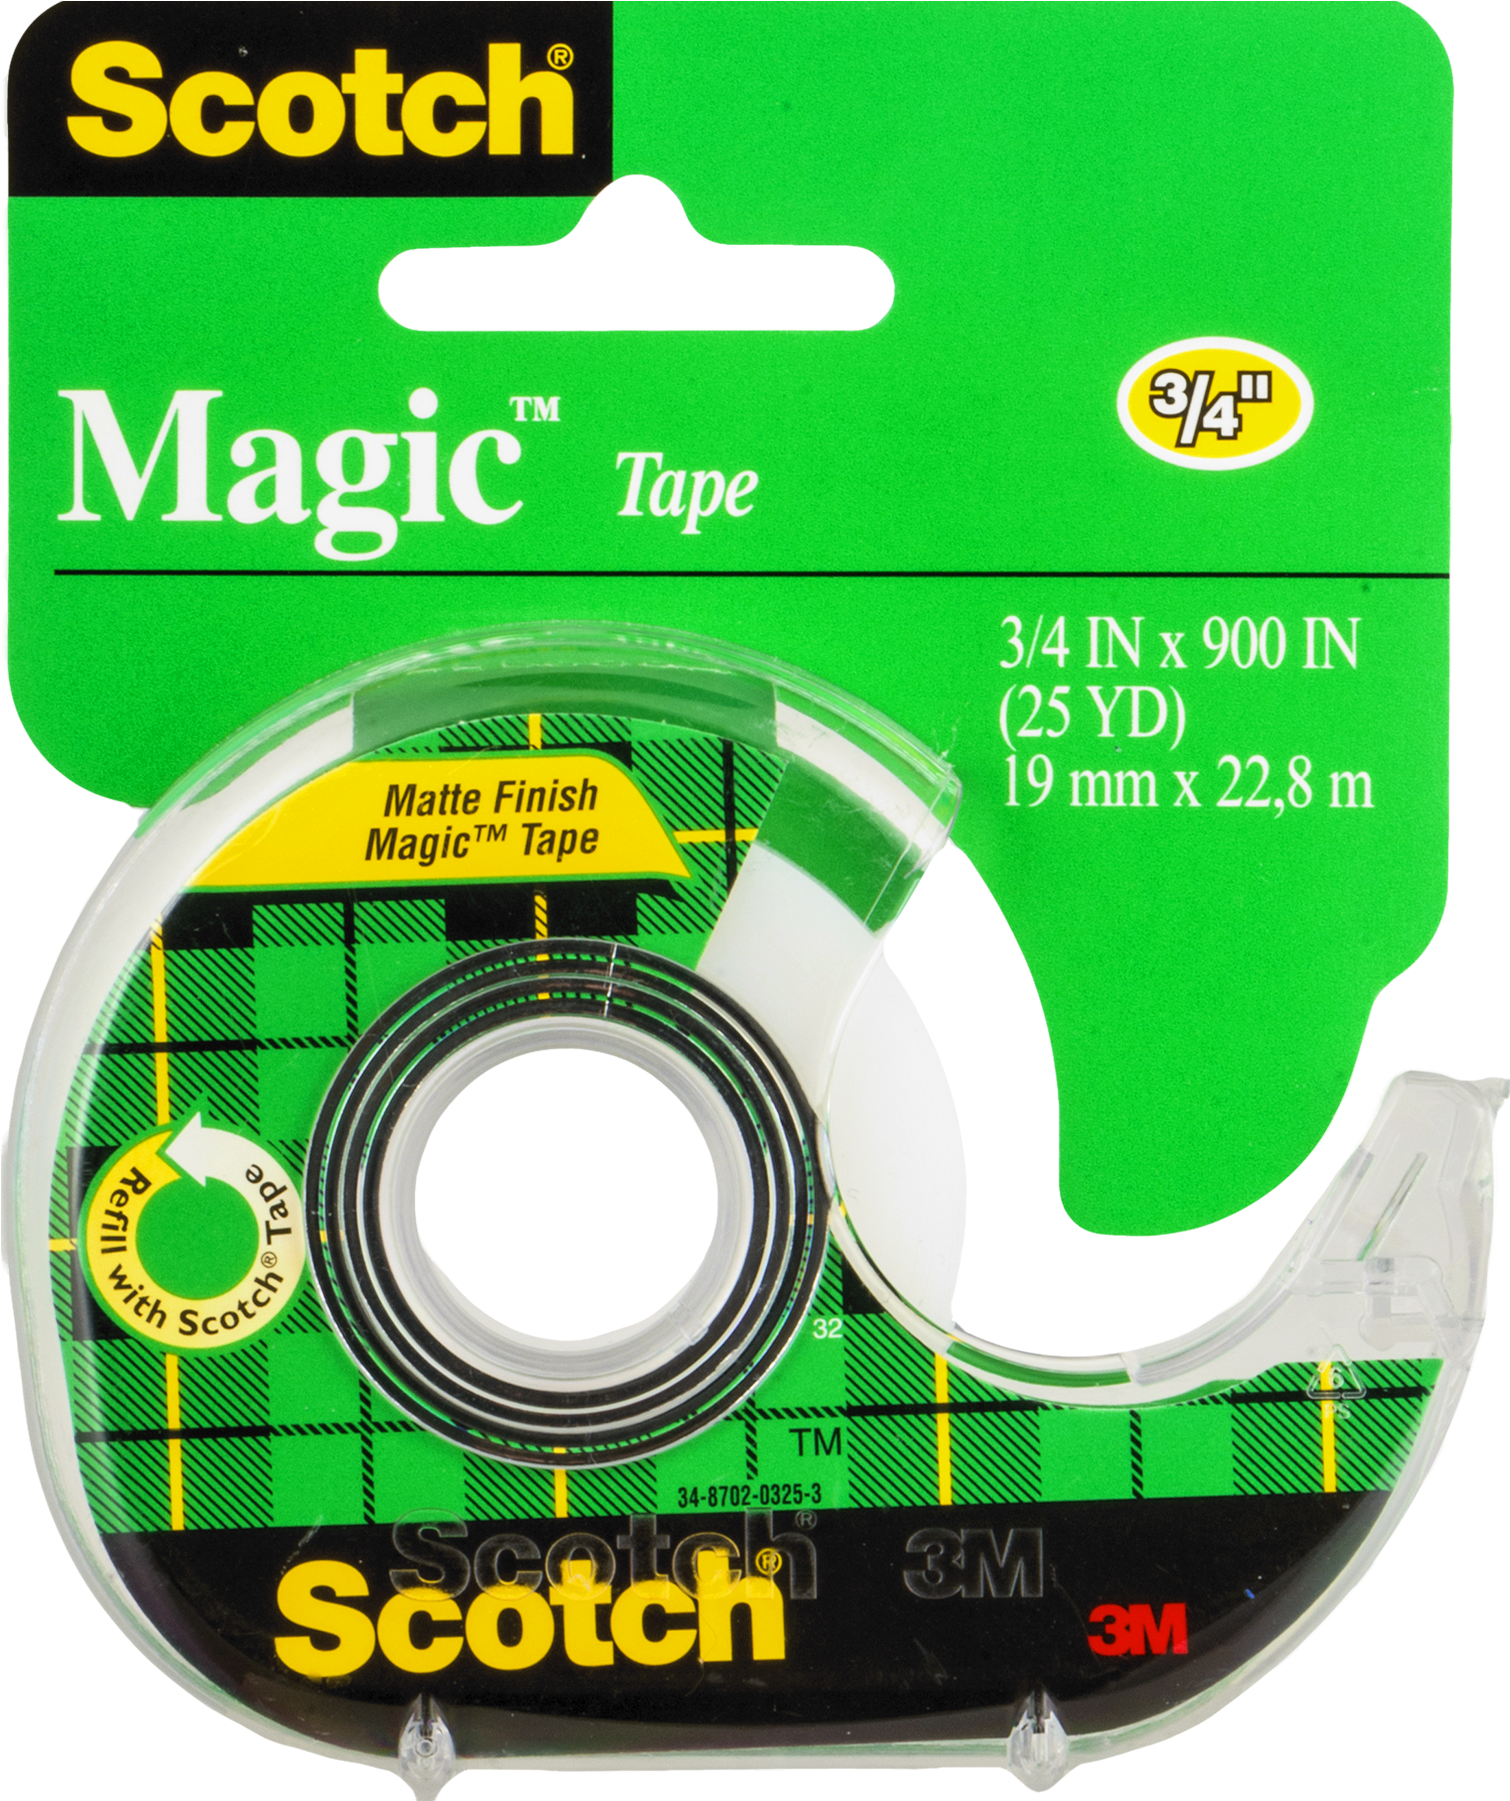 Scotch Magic Tape Packaging PNG